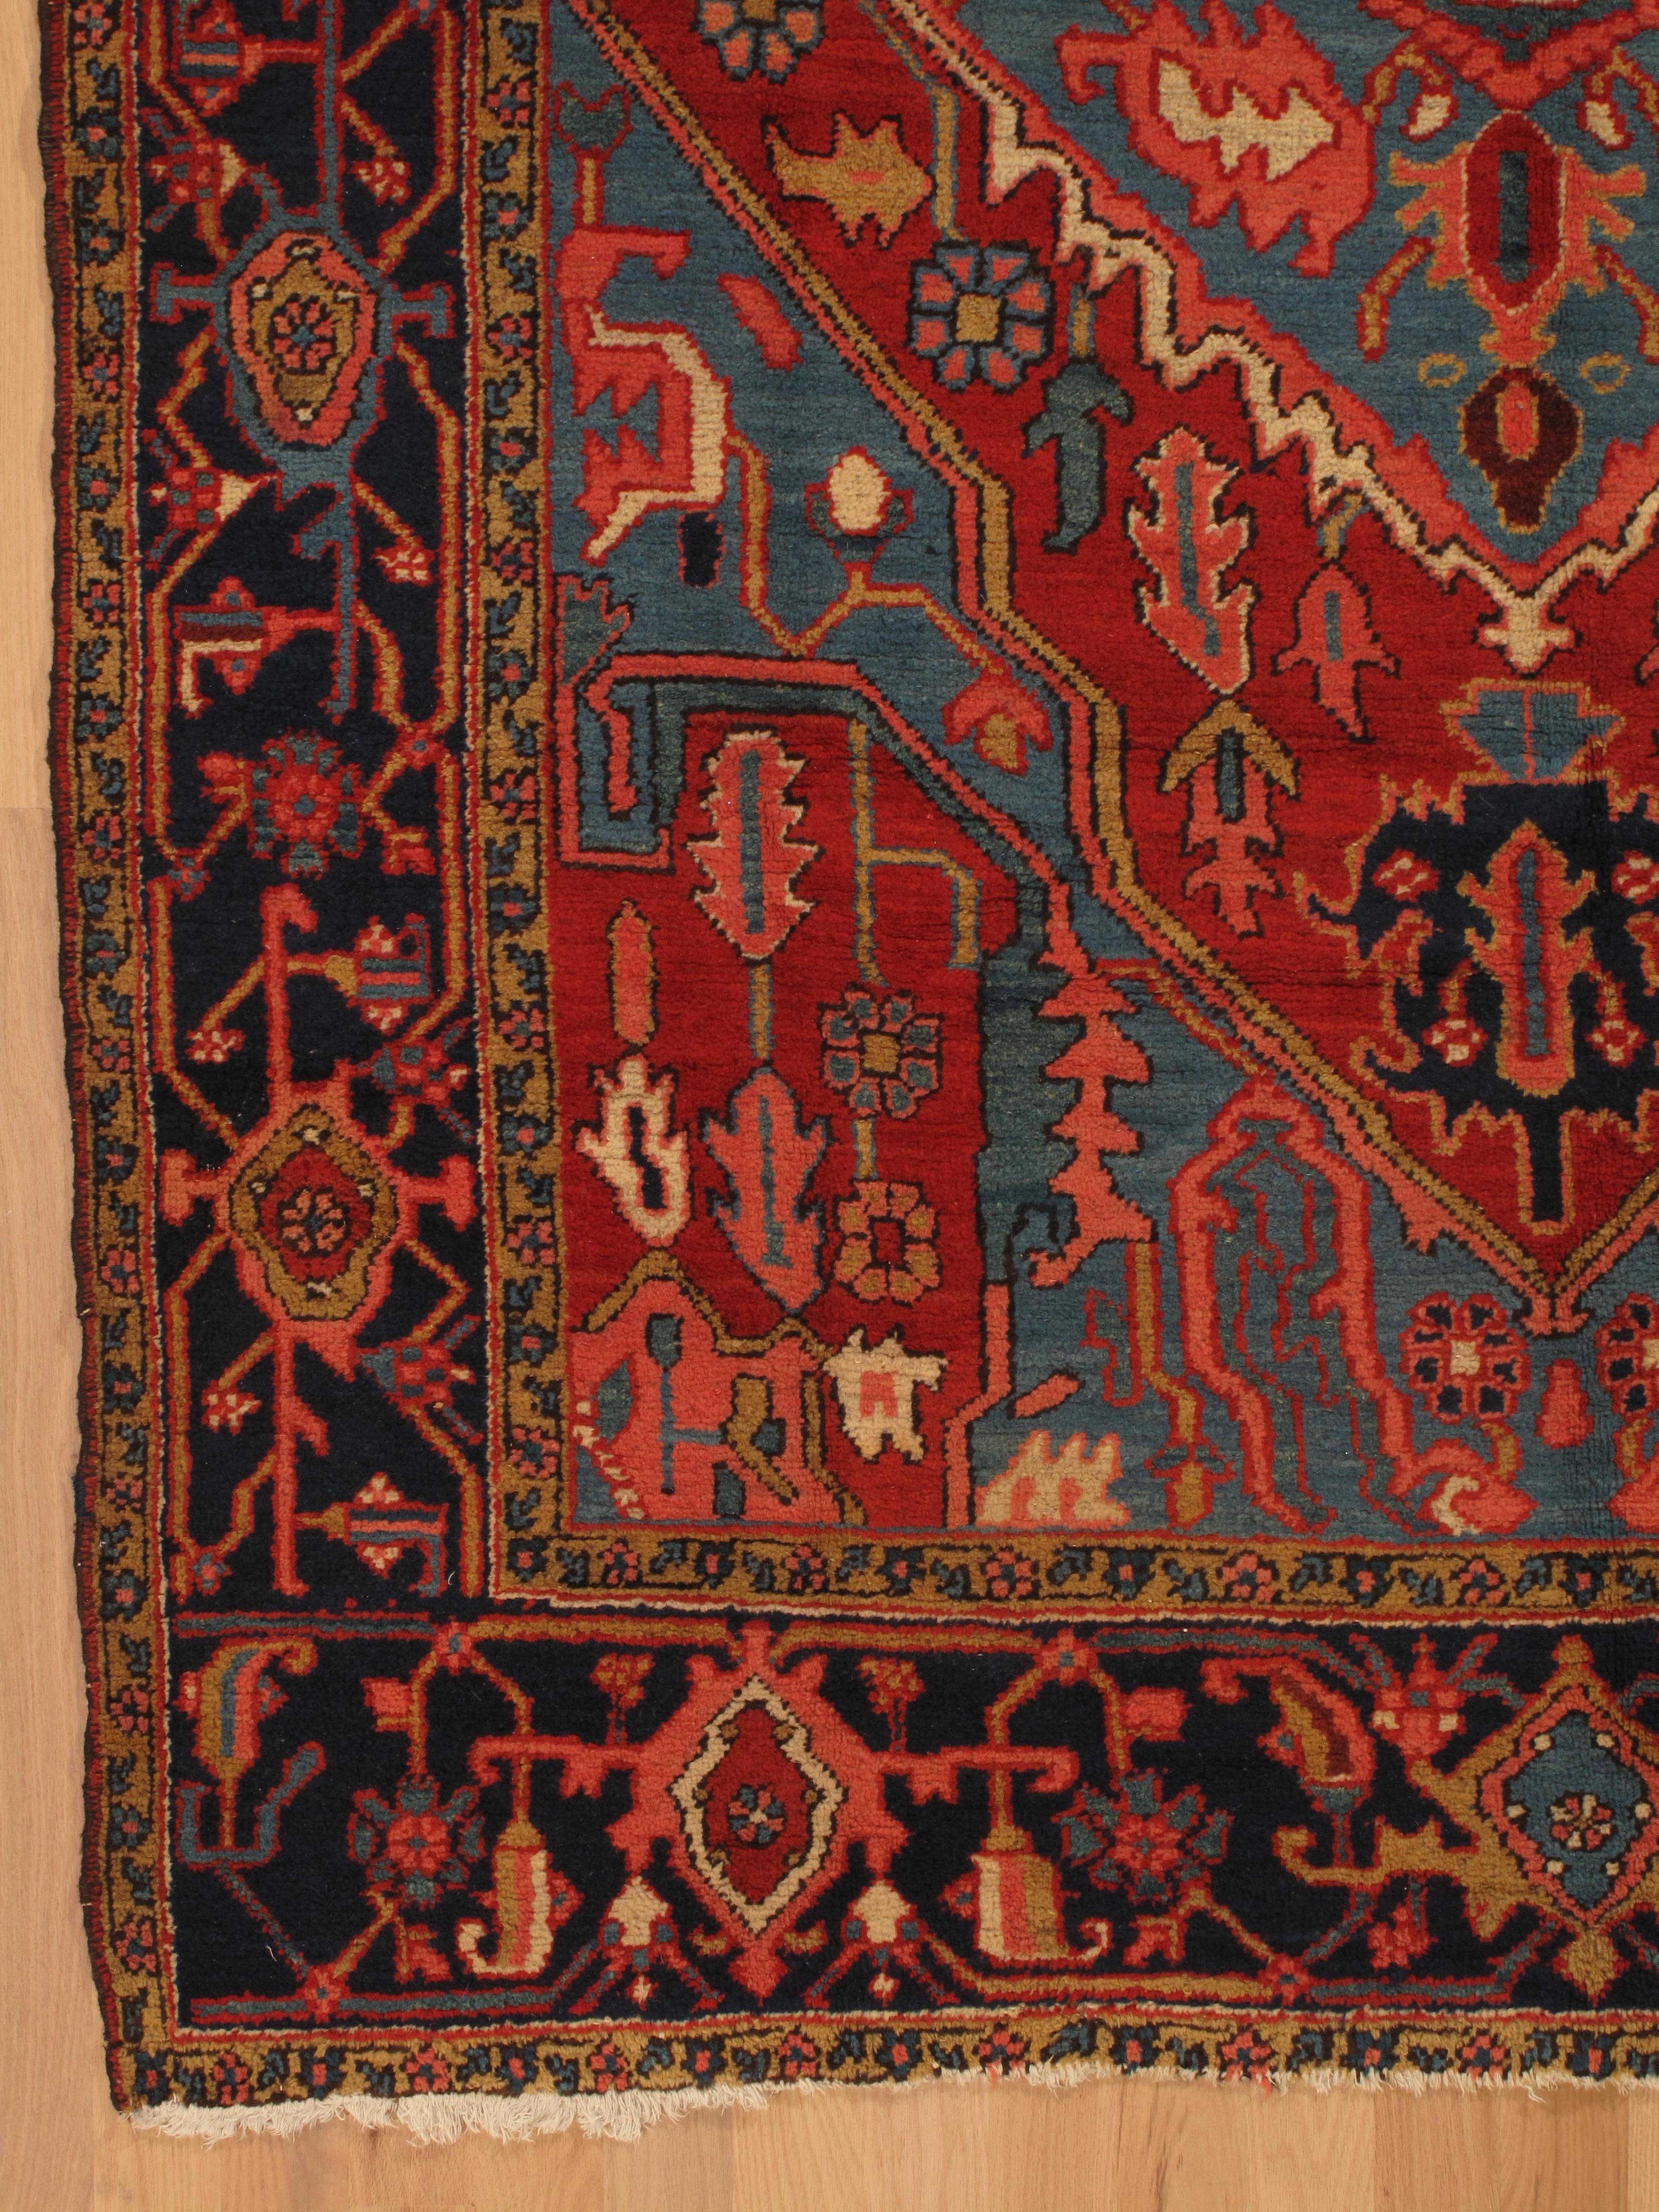 Antique Persian Serapi Carpet Handmade Wool Oriental Rug, Red, Ivory, Light Blue For Sale 1